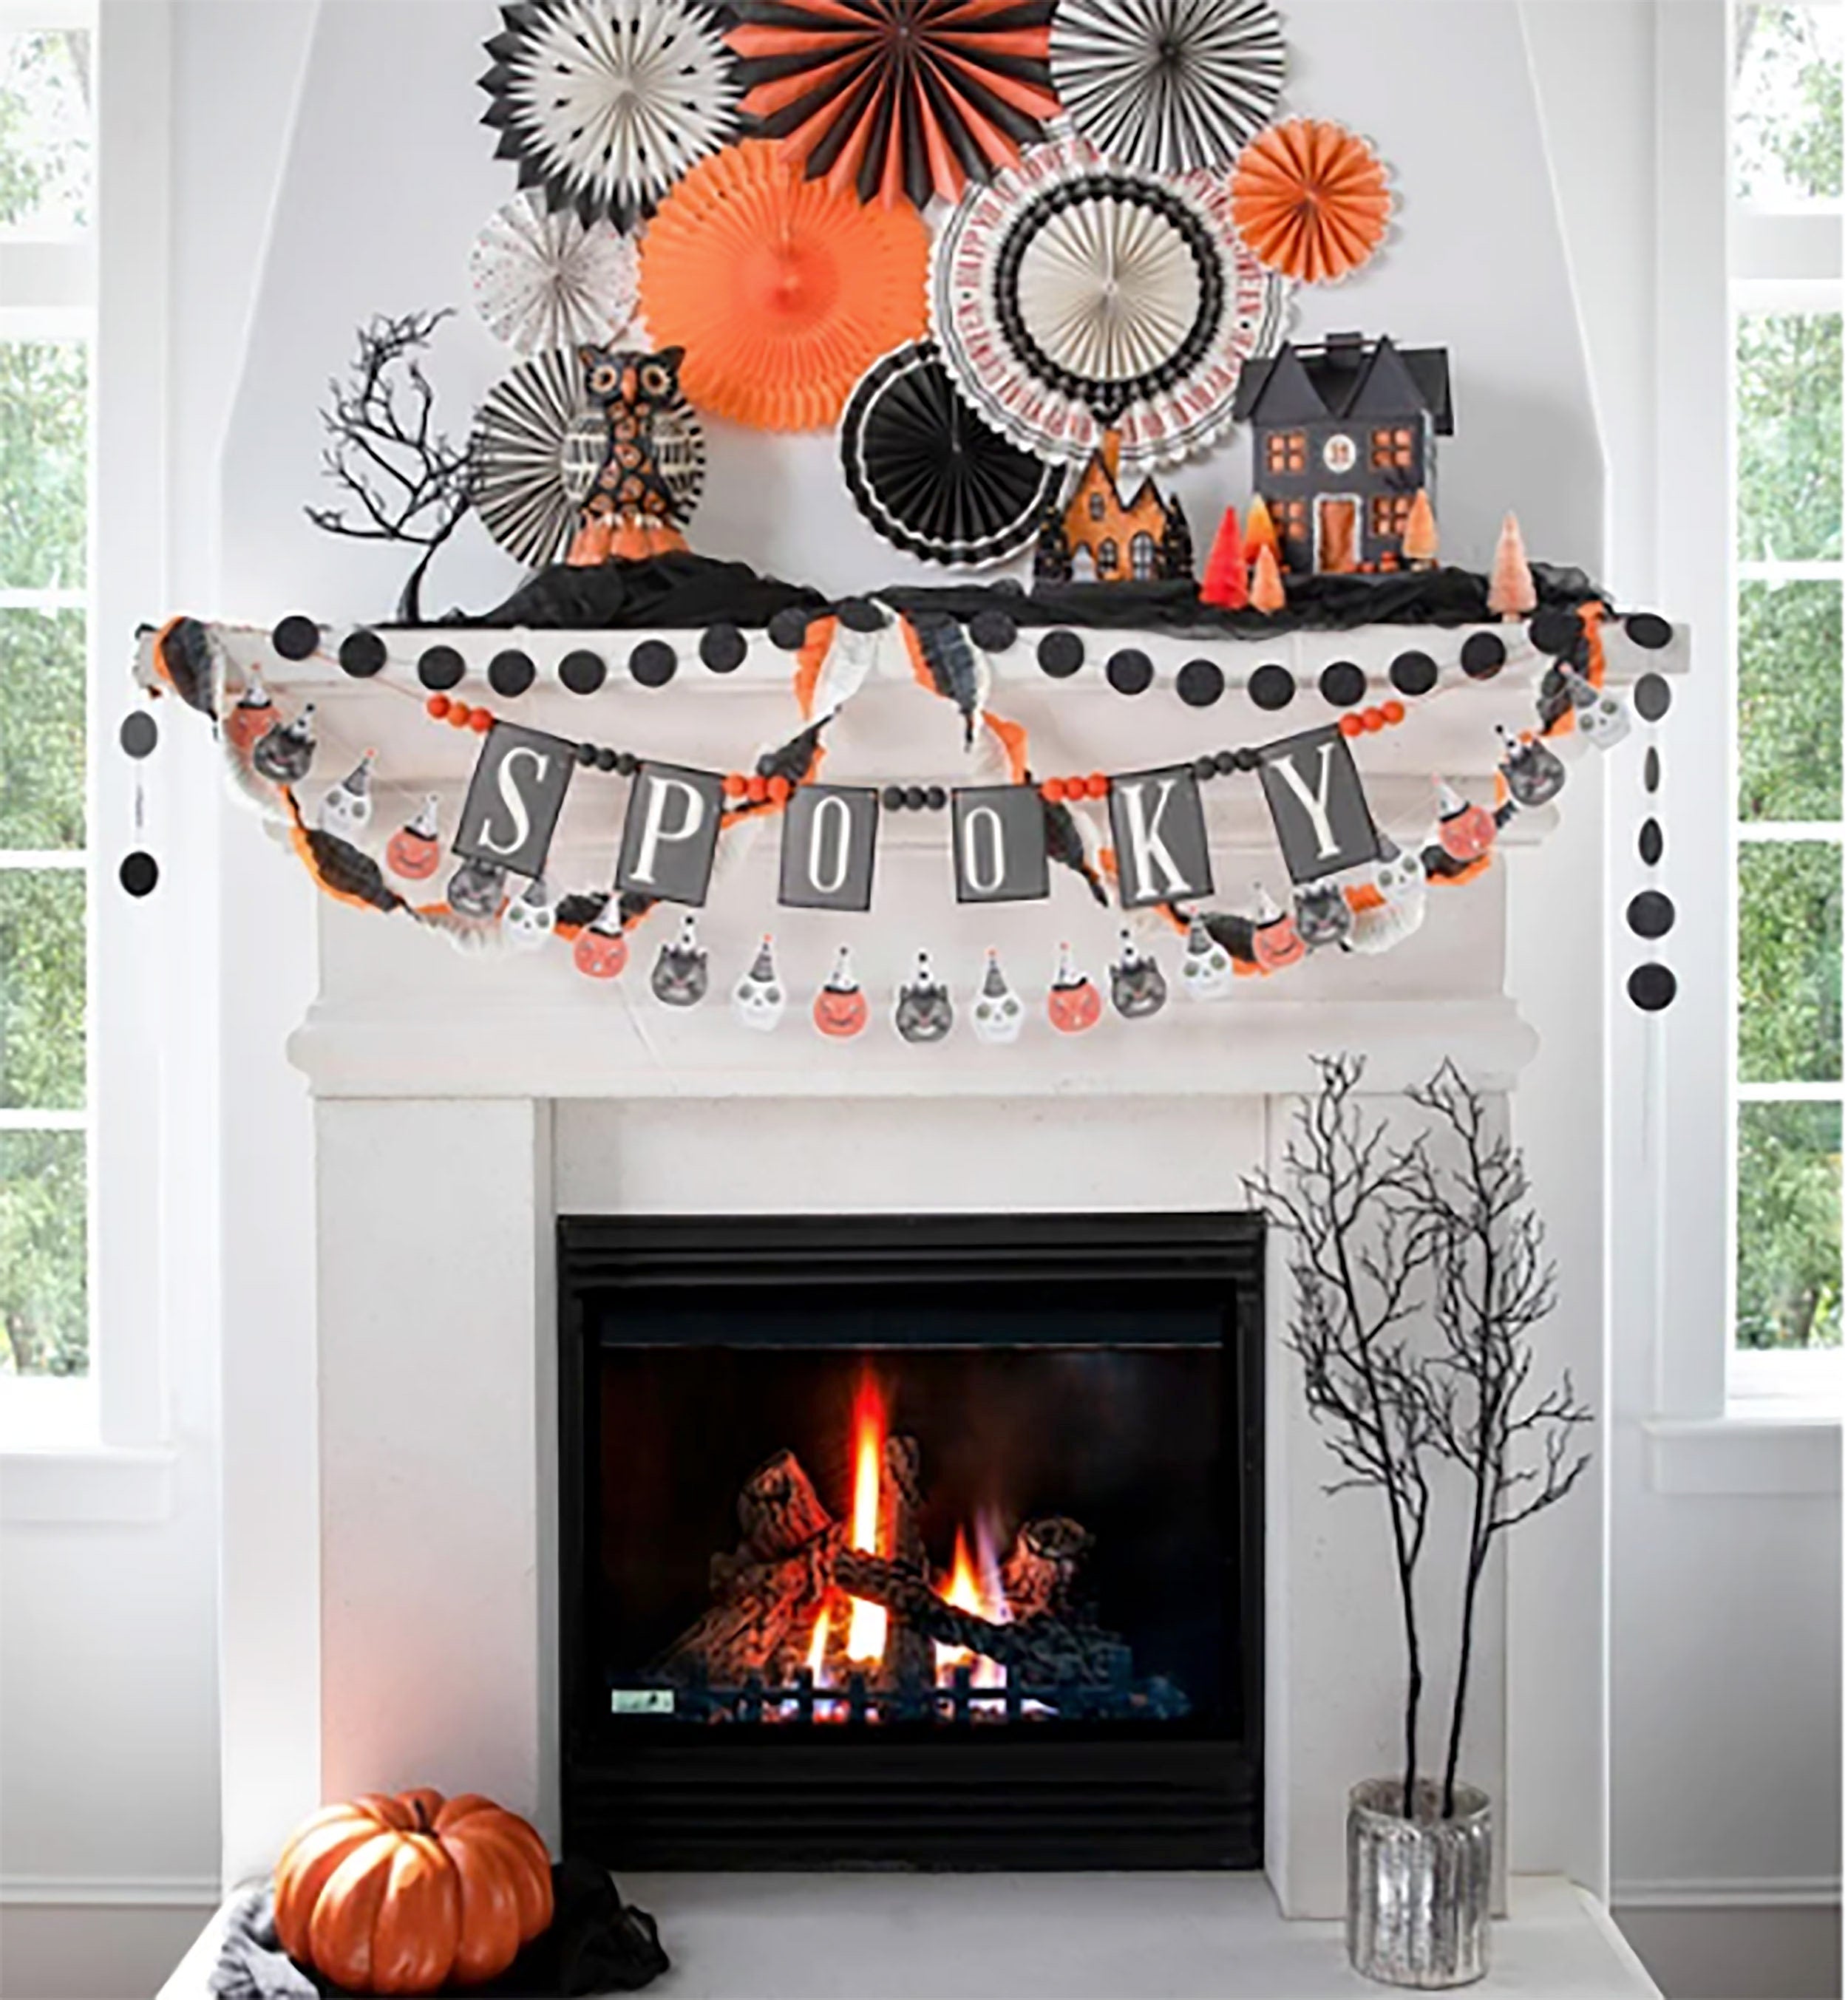 Halloween Streamers | Halloween Party Decorations - Halloween Garland - Halloween Wall Decor - Halloween Decor - Halloween Supplies